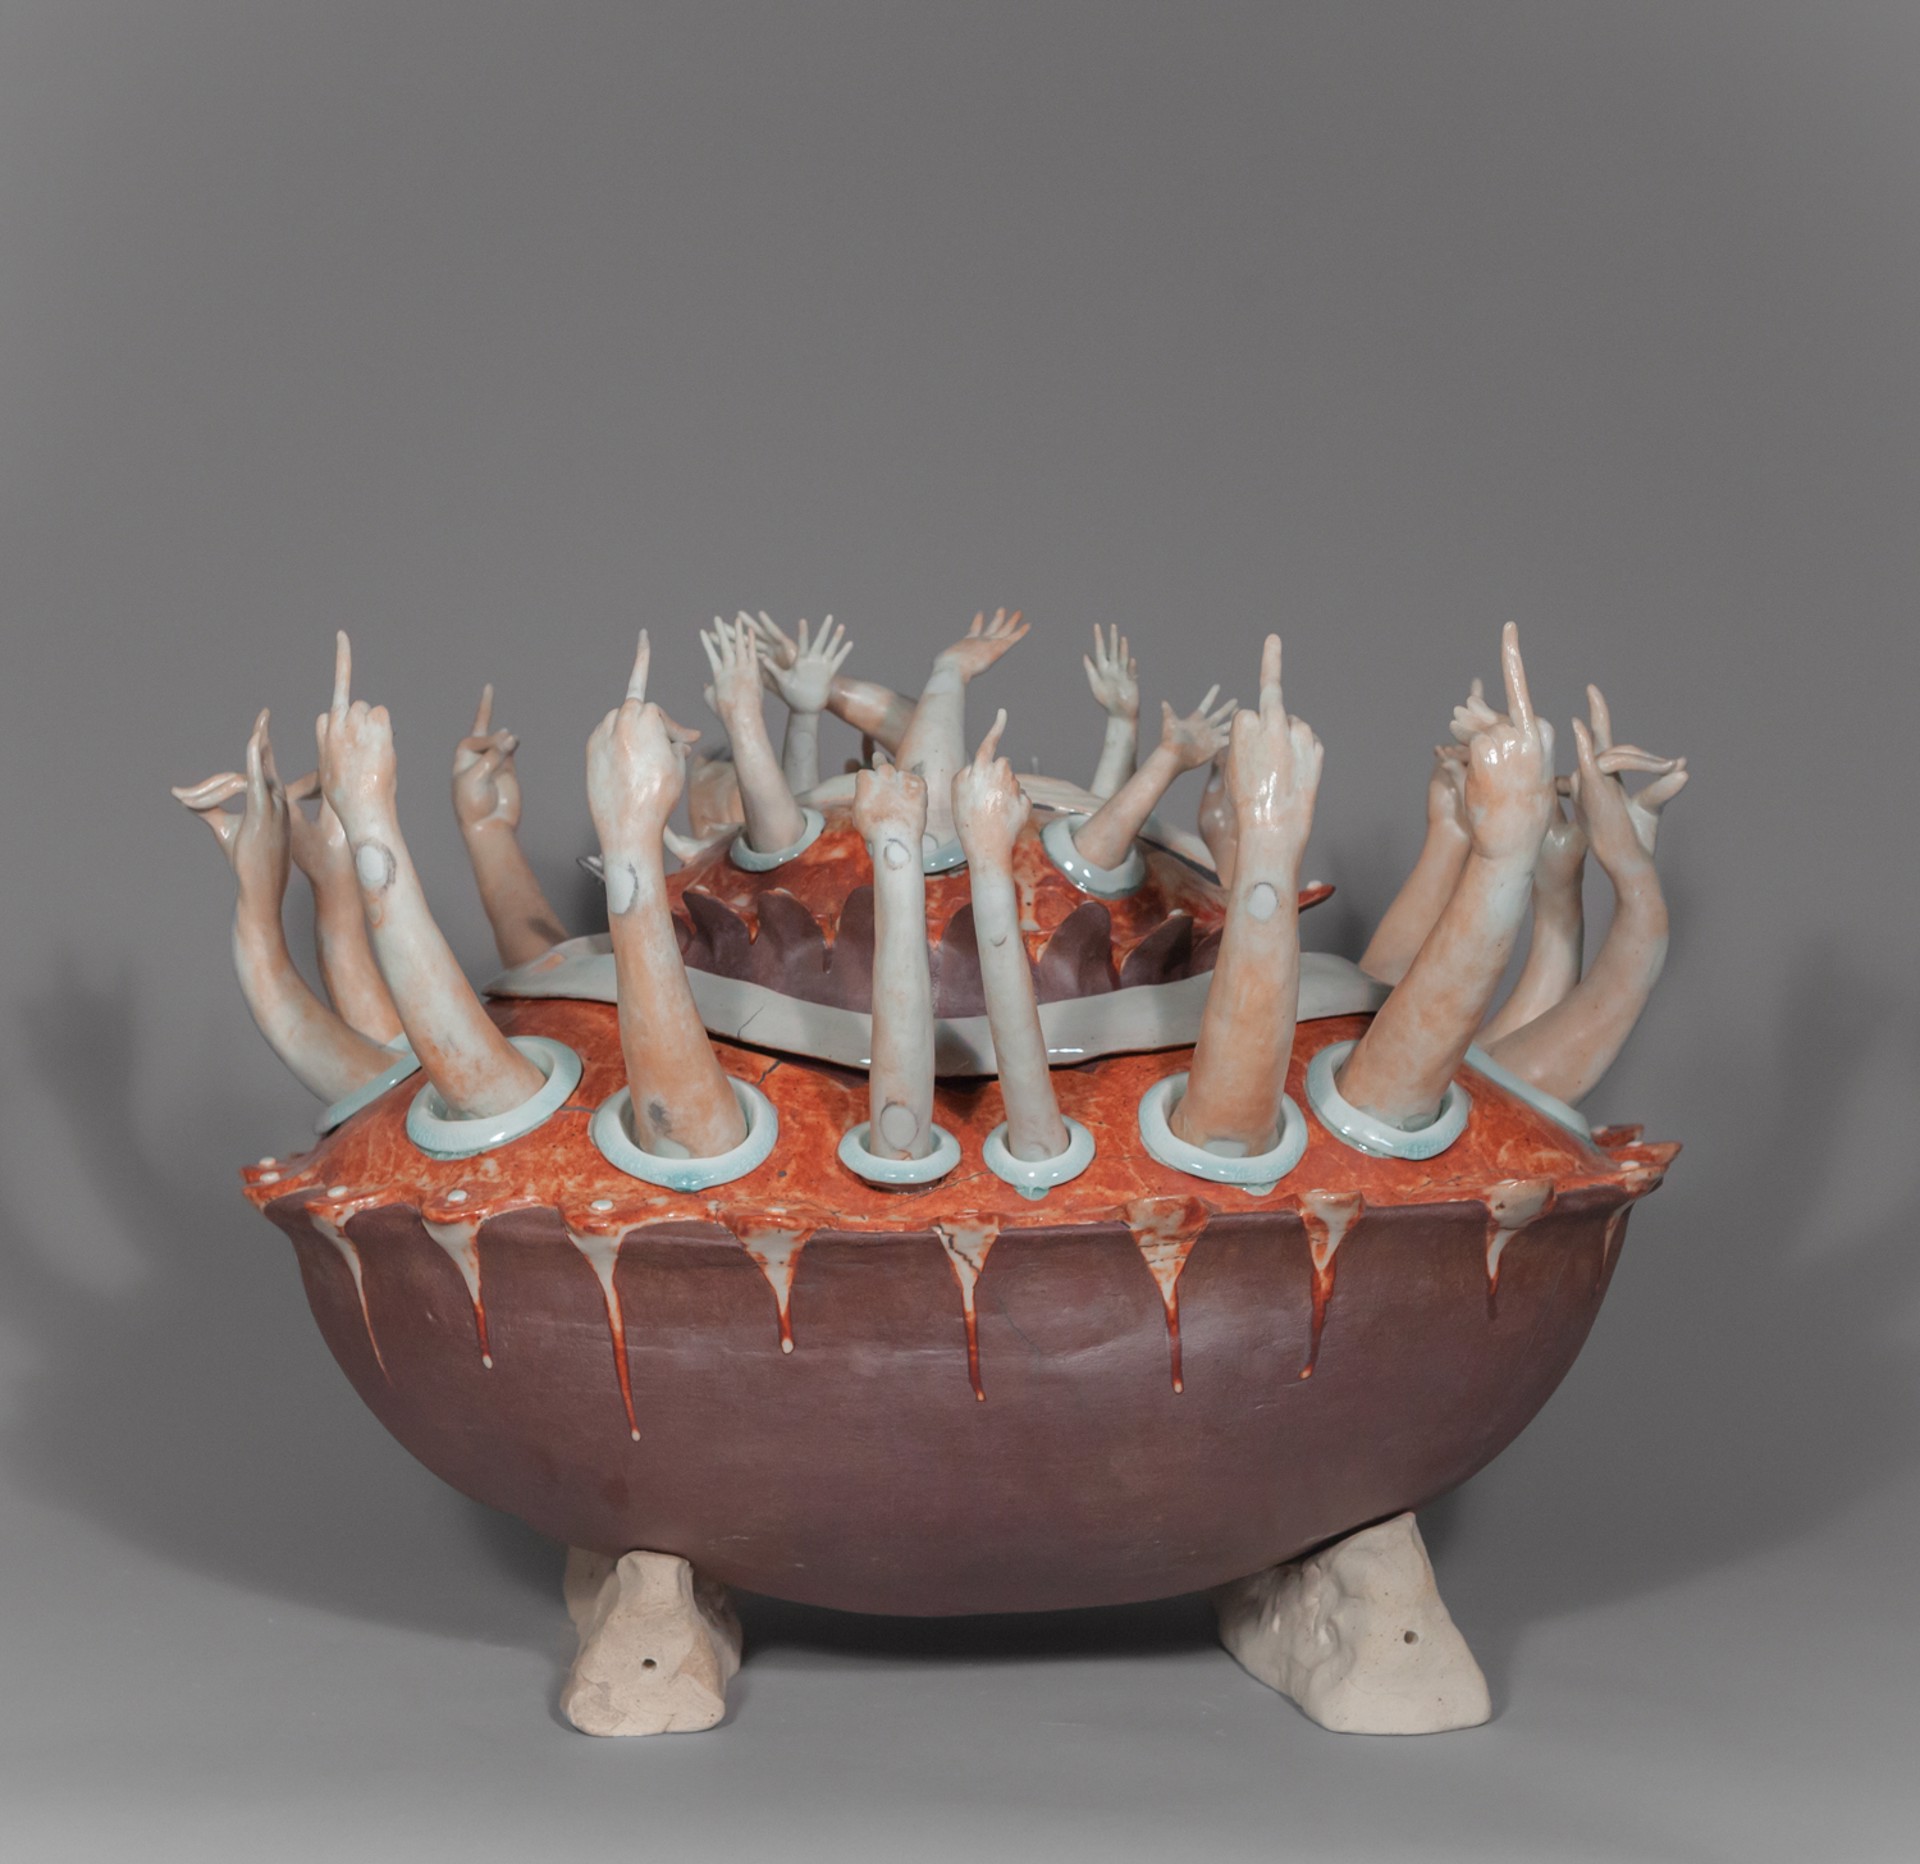 Venus Jar 2: Utsuro Bune [Hollow Ship] by Hanako O'Leary